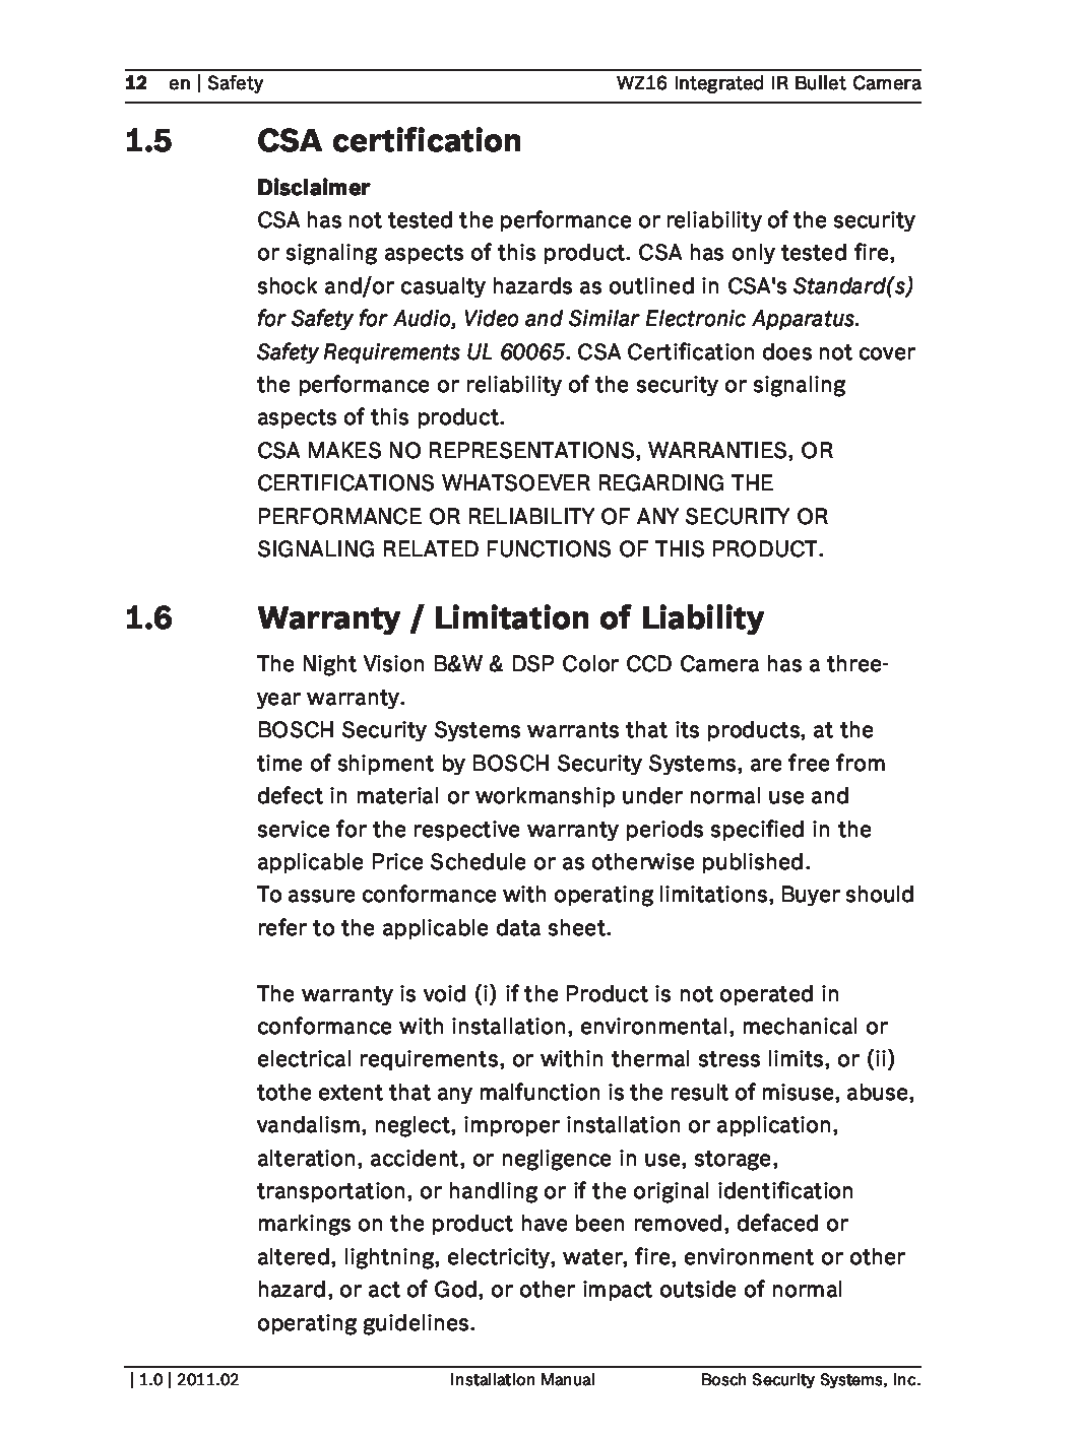 Bosch Appliances WZ16 installation manual 1.5CSA certification, 1.6Warranty / Limitation of Liability, Disclaimer 